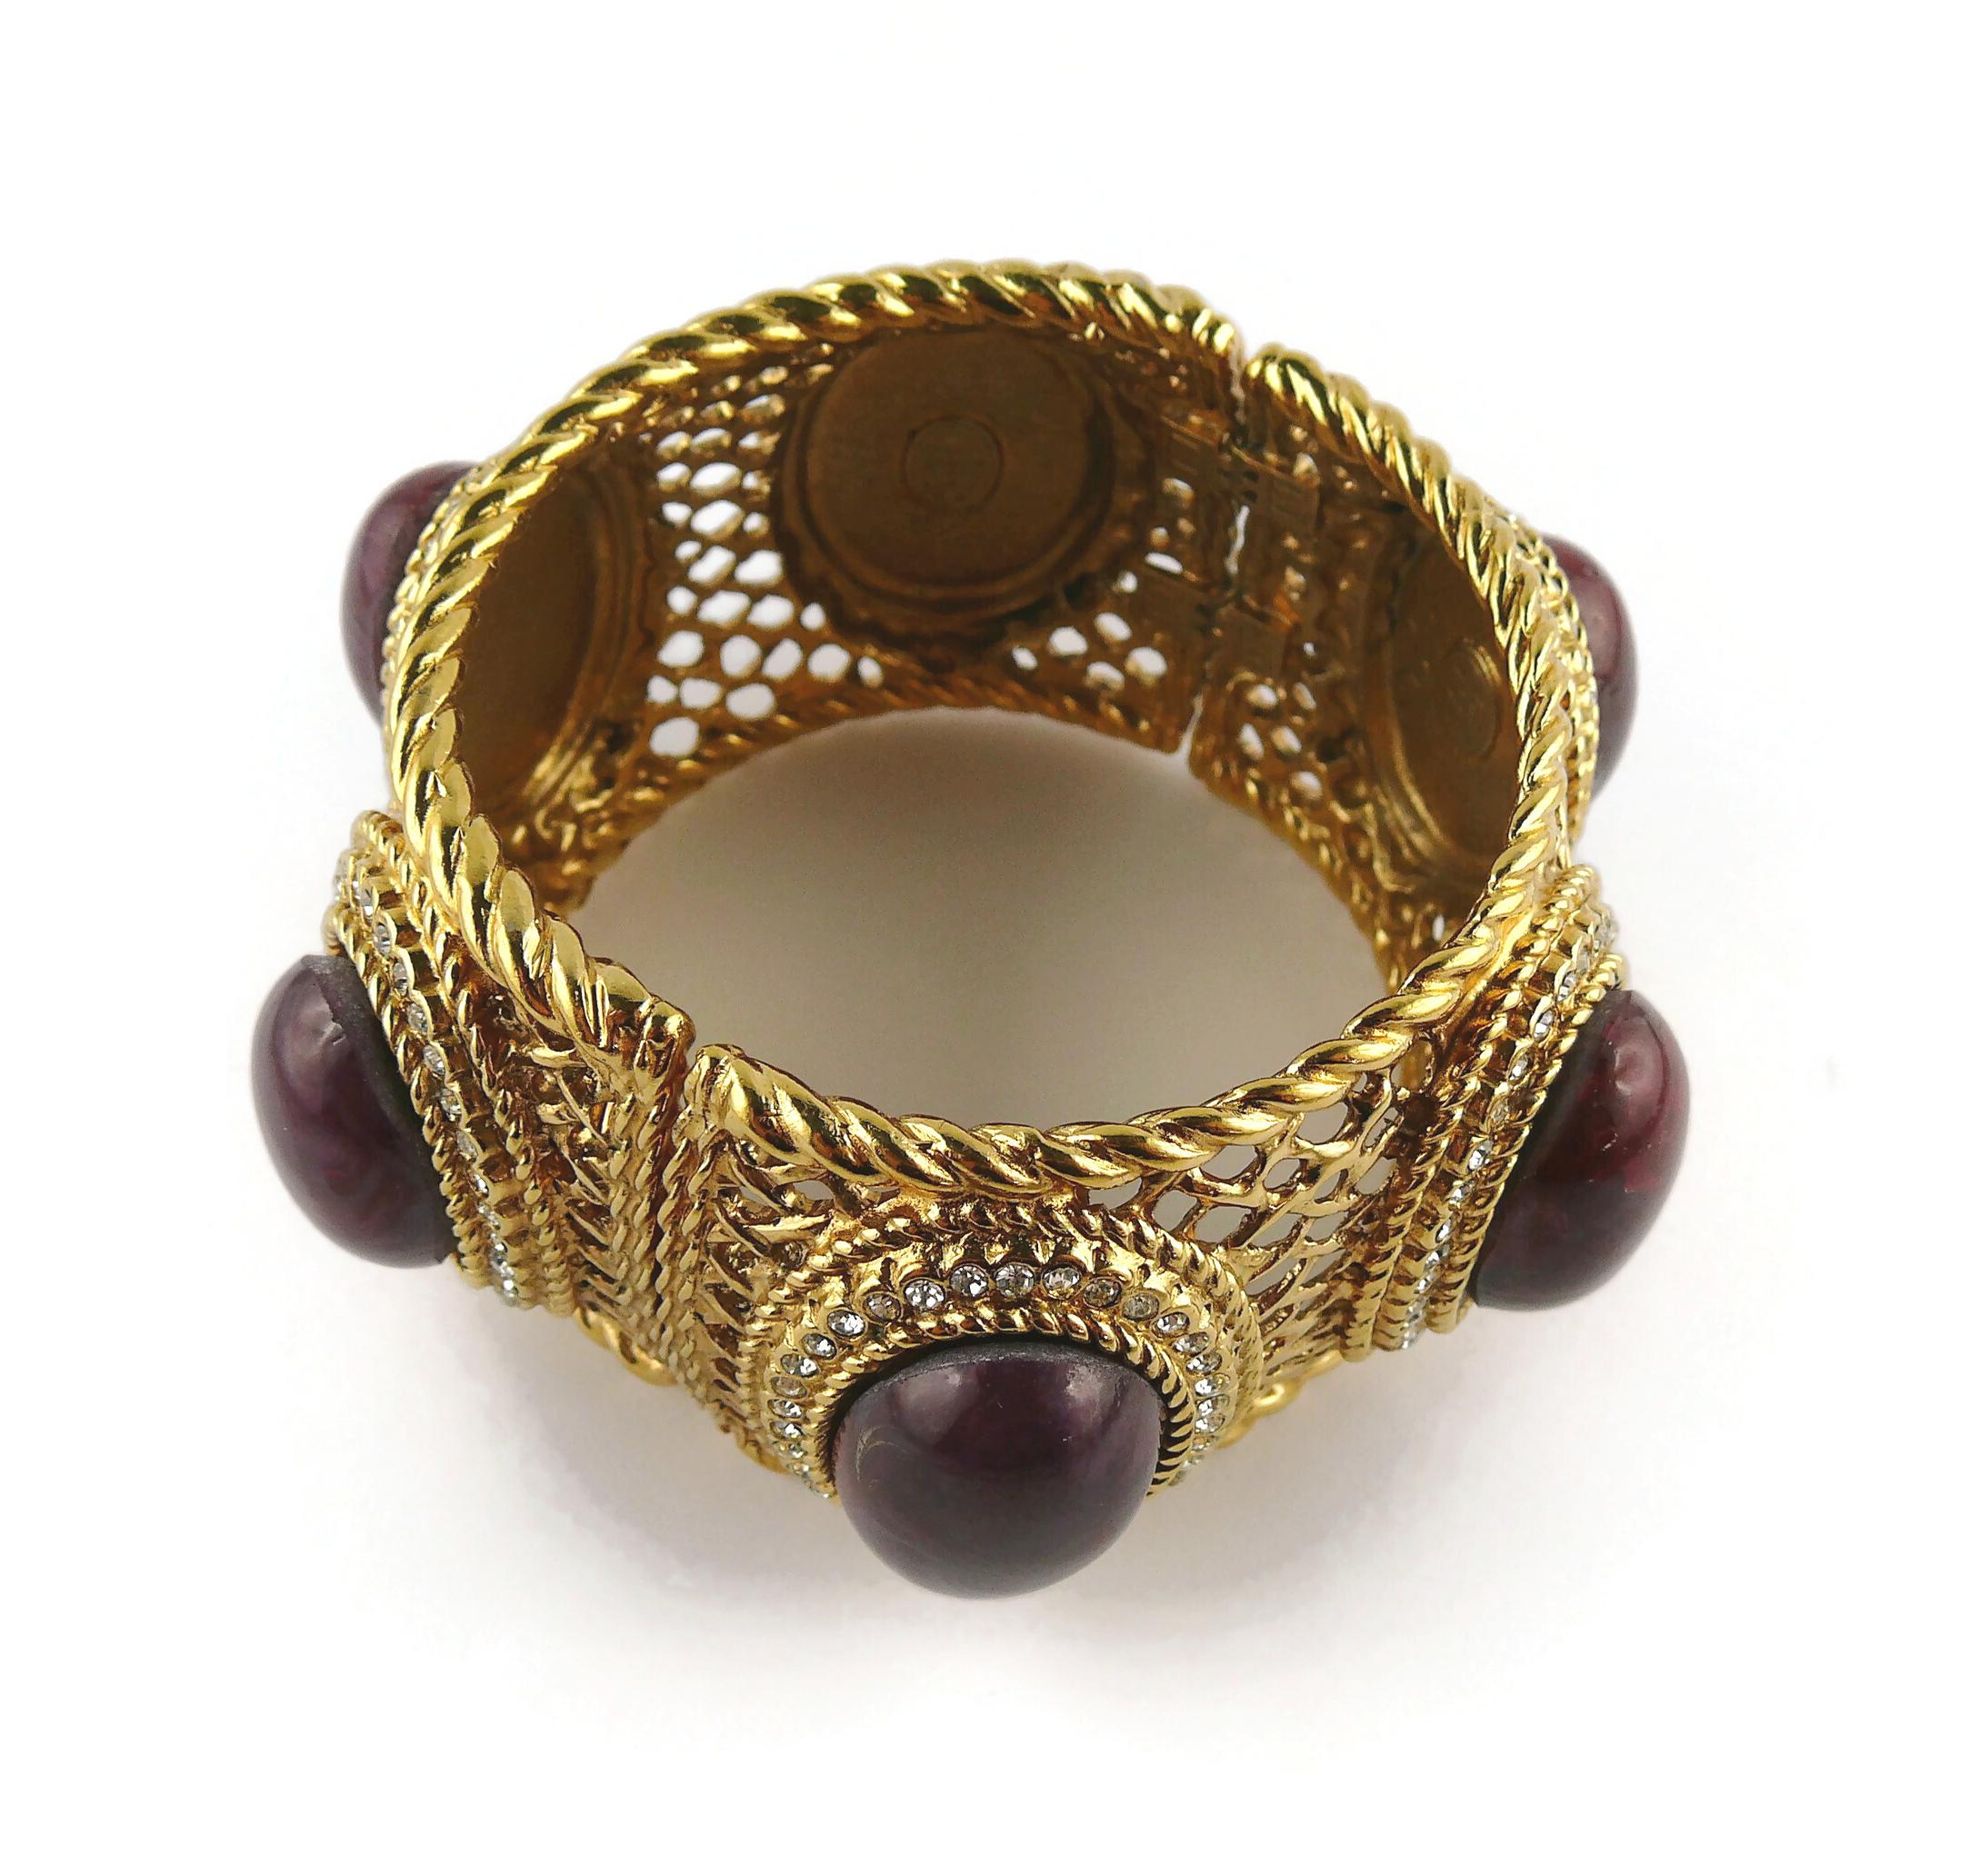 Christian Dior Boutique Massive Jewelled Gold Toned Latticework Cuff Bracelet For Sale 4